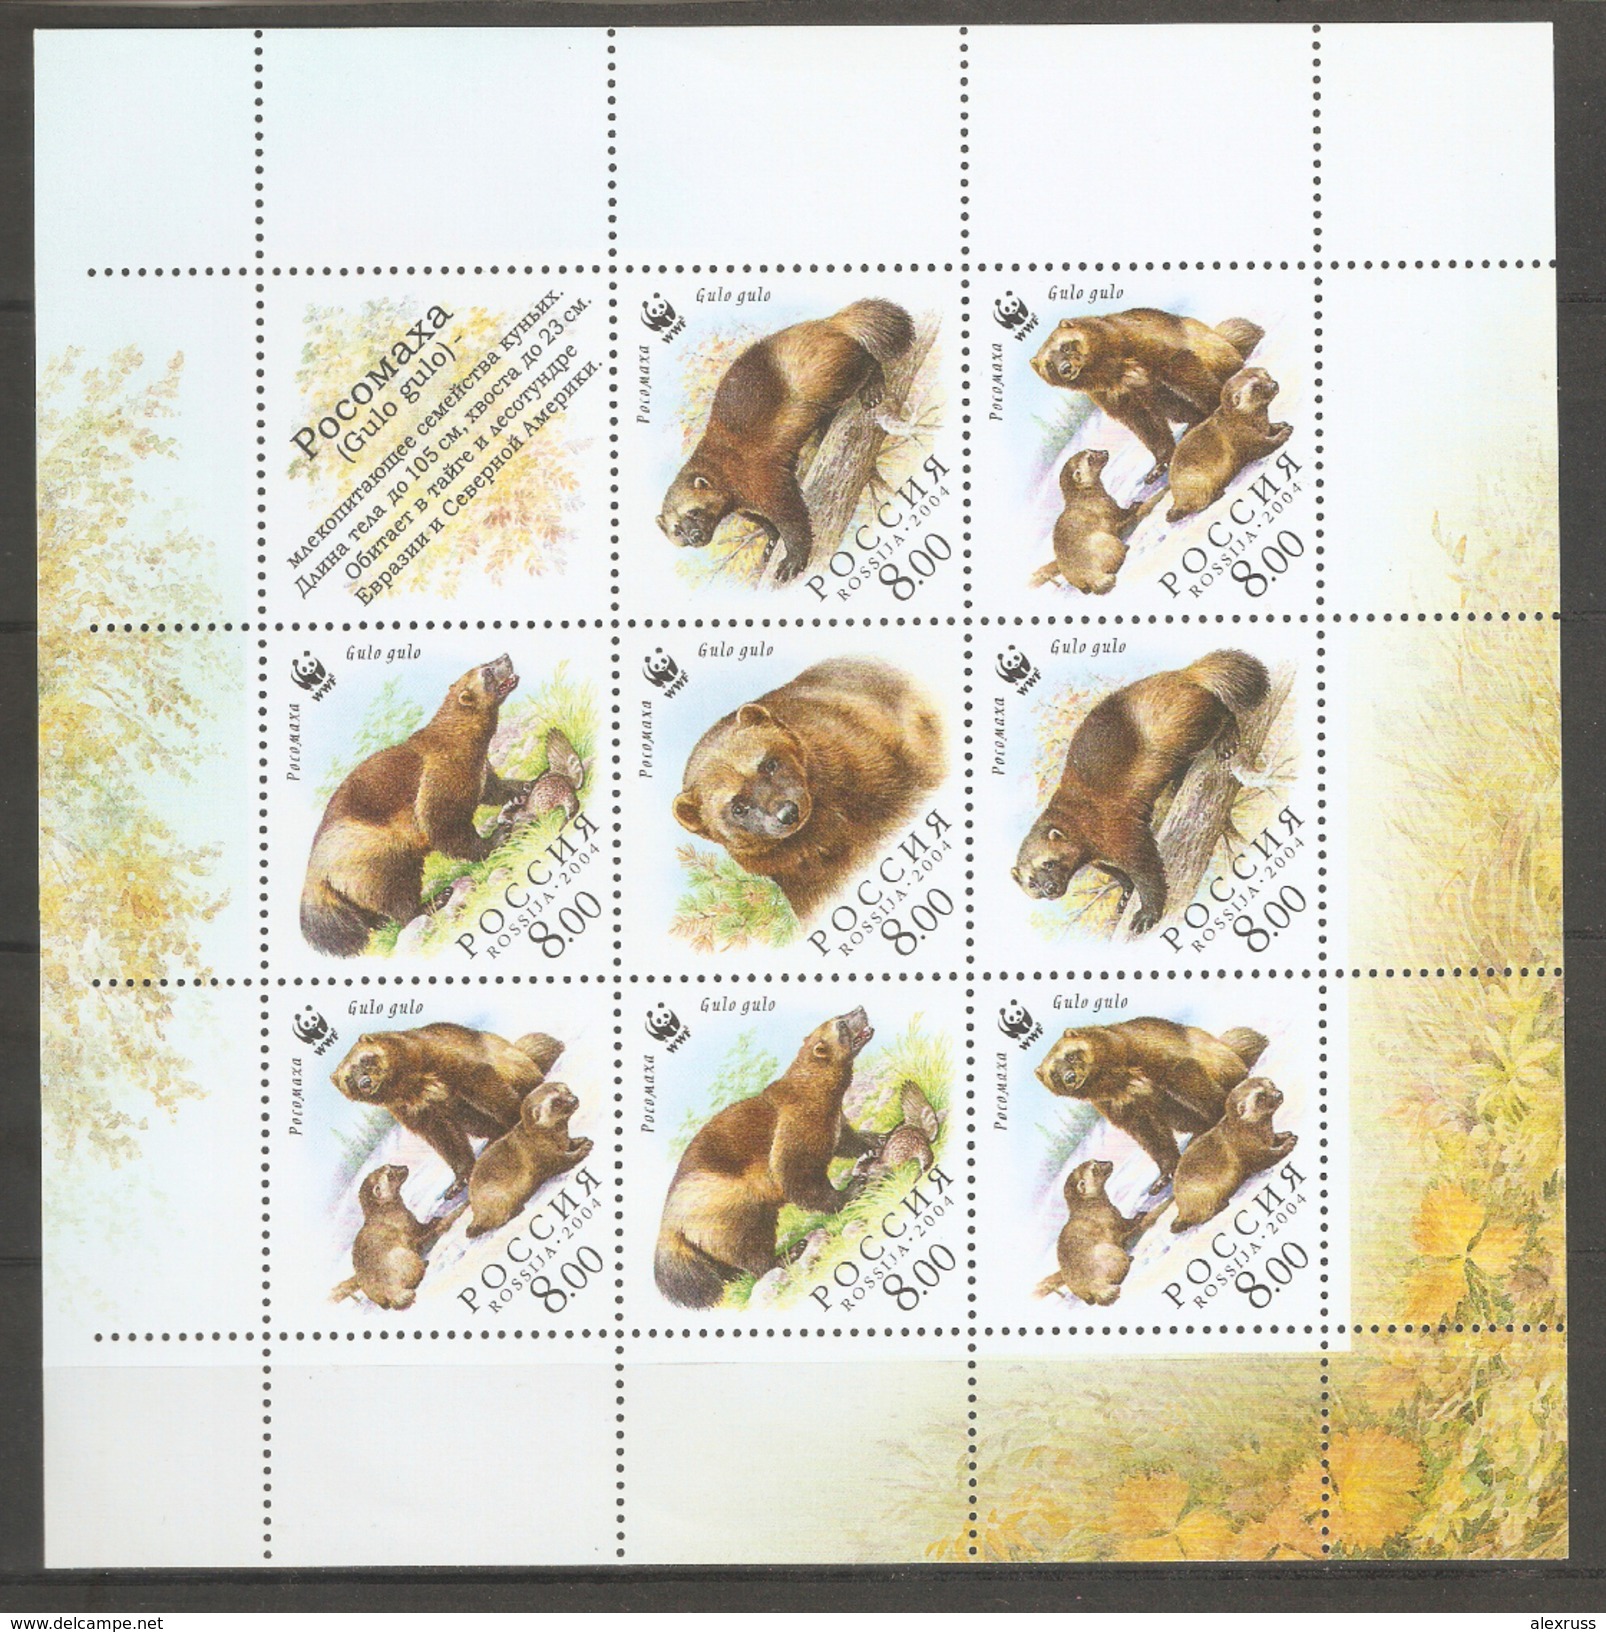 Russia 2004, Mini Sheet, WWF Nature Fund, Wolverine, Gulo Gulo, Scott # 6857e,VF MNH** - Hojas Completas